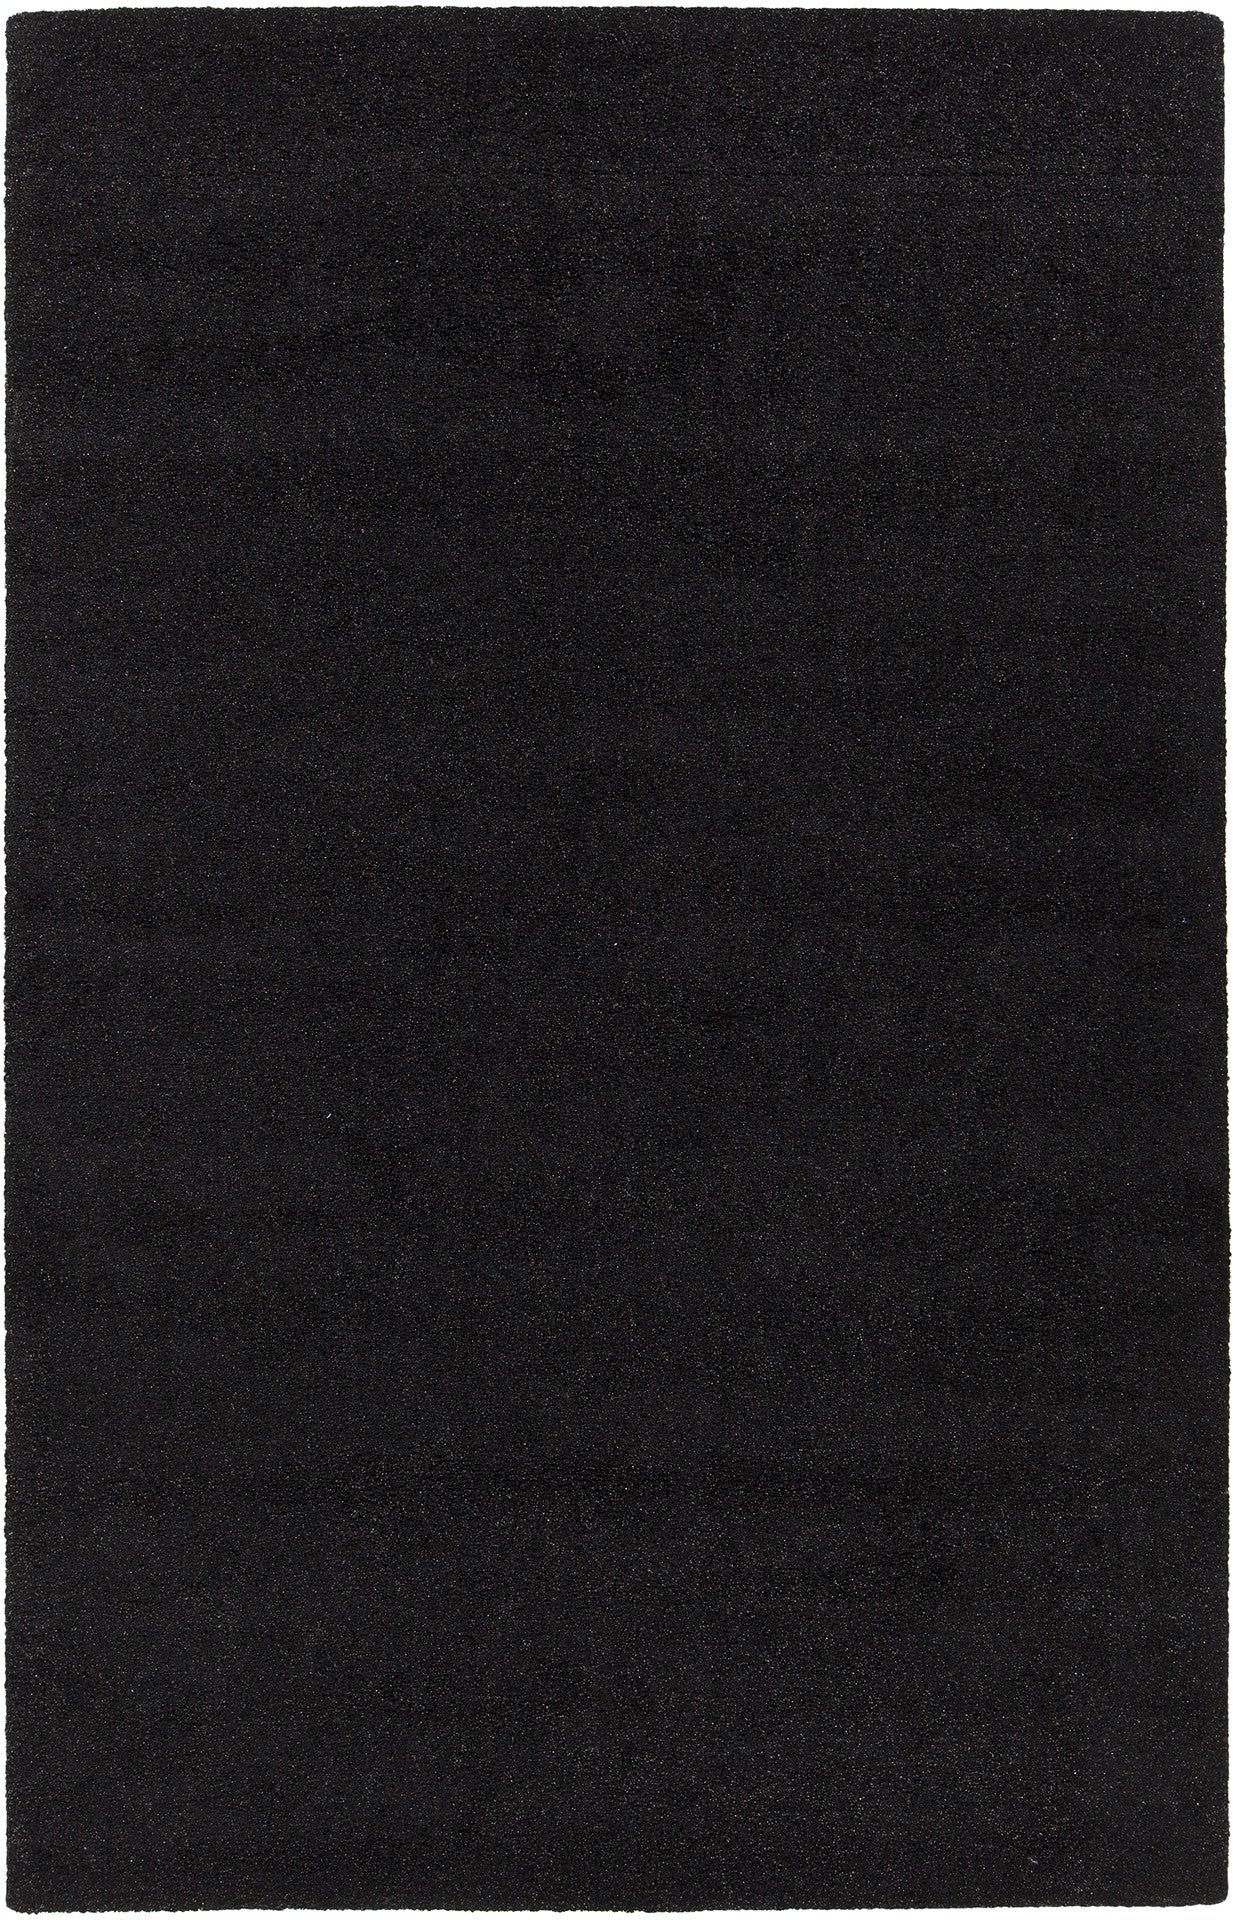 Chandra Alcon ALC-35503 Black Area Rug main image